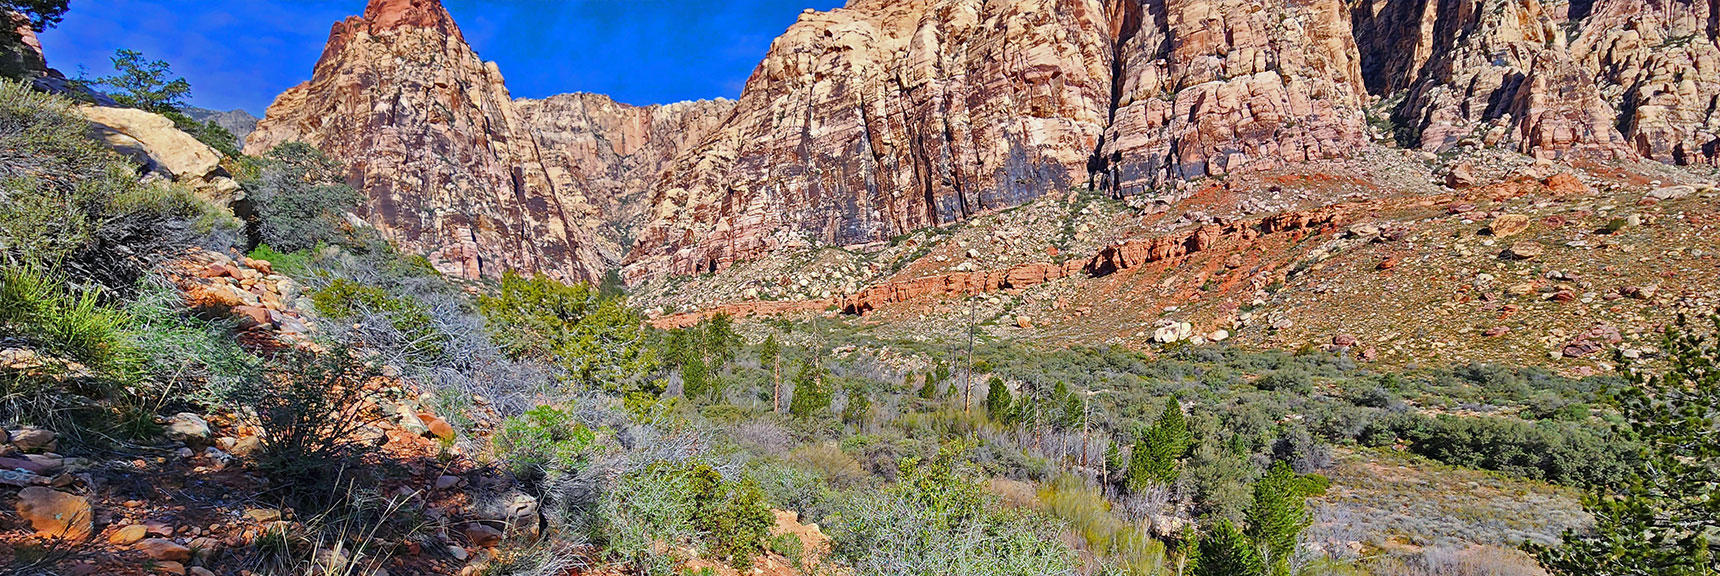 Band of Red Rock at Bridge Mt. Base is Premier Bouldering Destination | Knoll Trail | Red Rock Canyon National Conservation Area, Nevada | David Smith | LasVegasAreaTrails.com